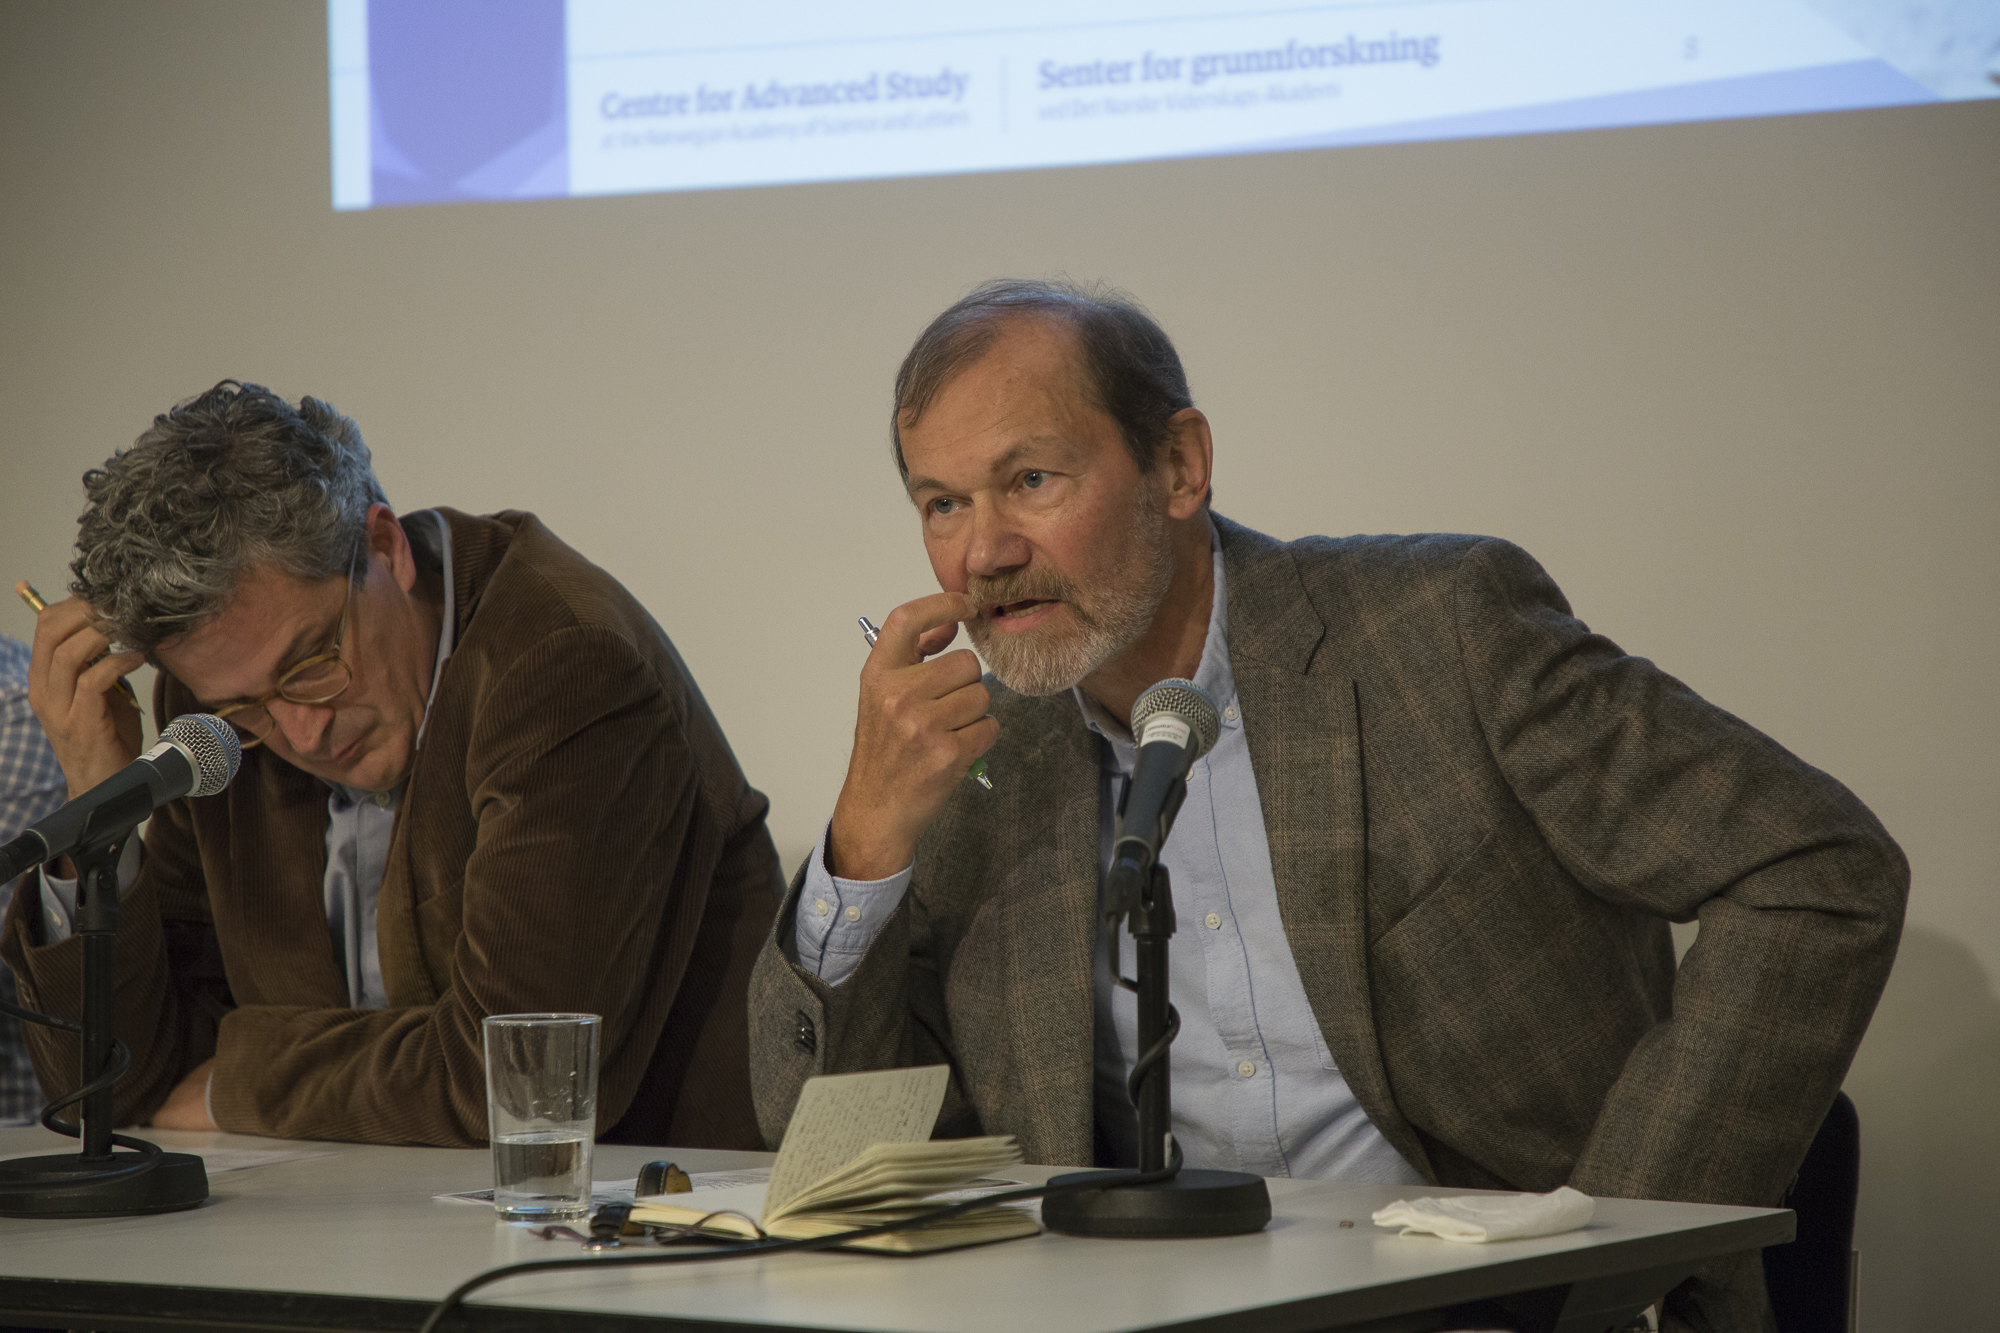 Øyvind Østerud, professor of political science at the University of Oslo, participates in a seminar on 17 November 2017. Photo: Camilla K. Elmar